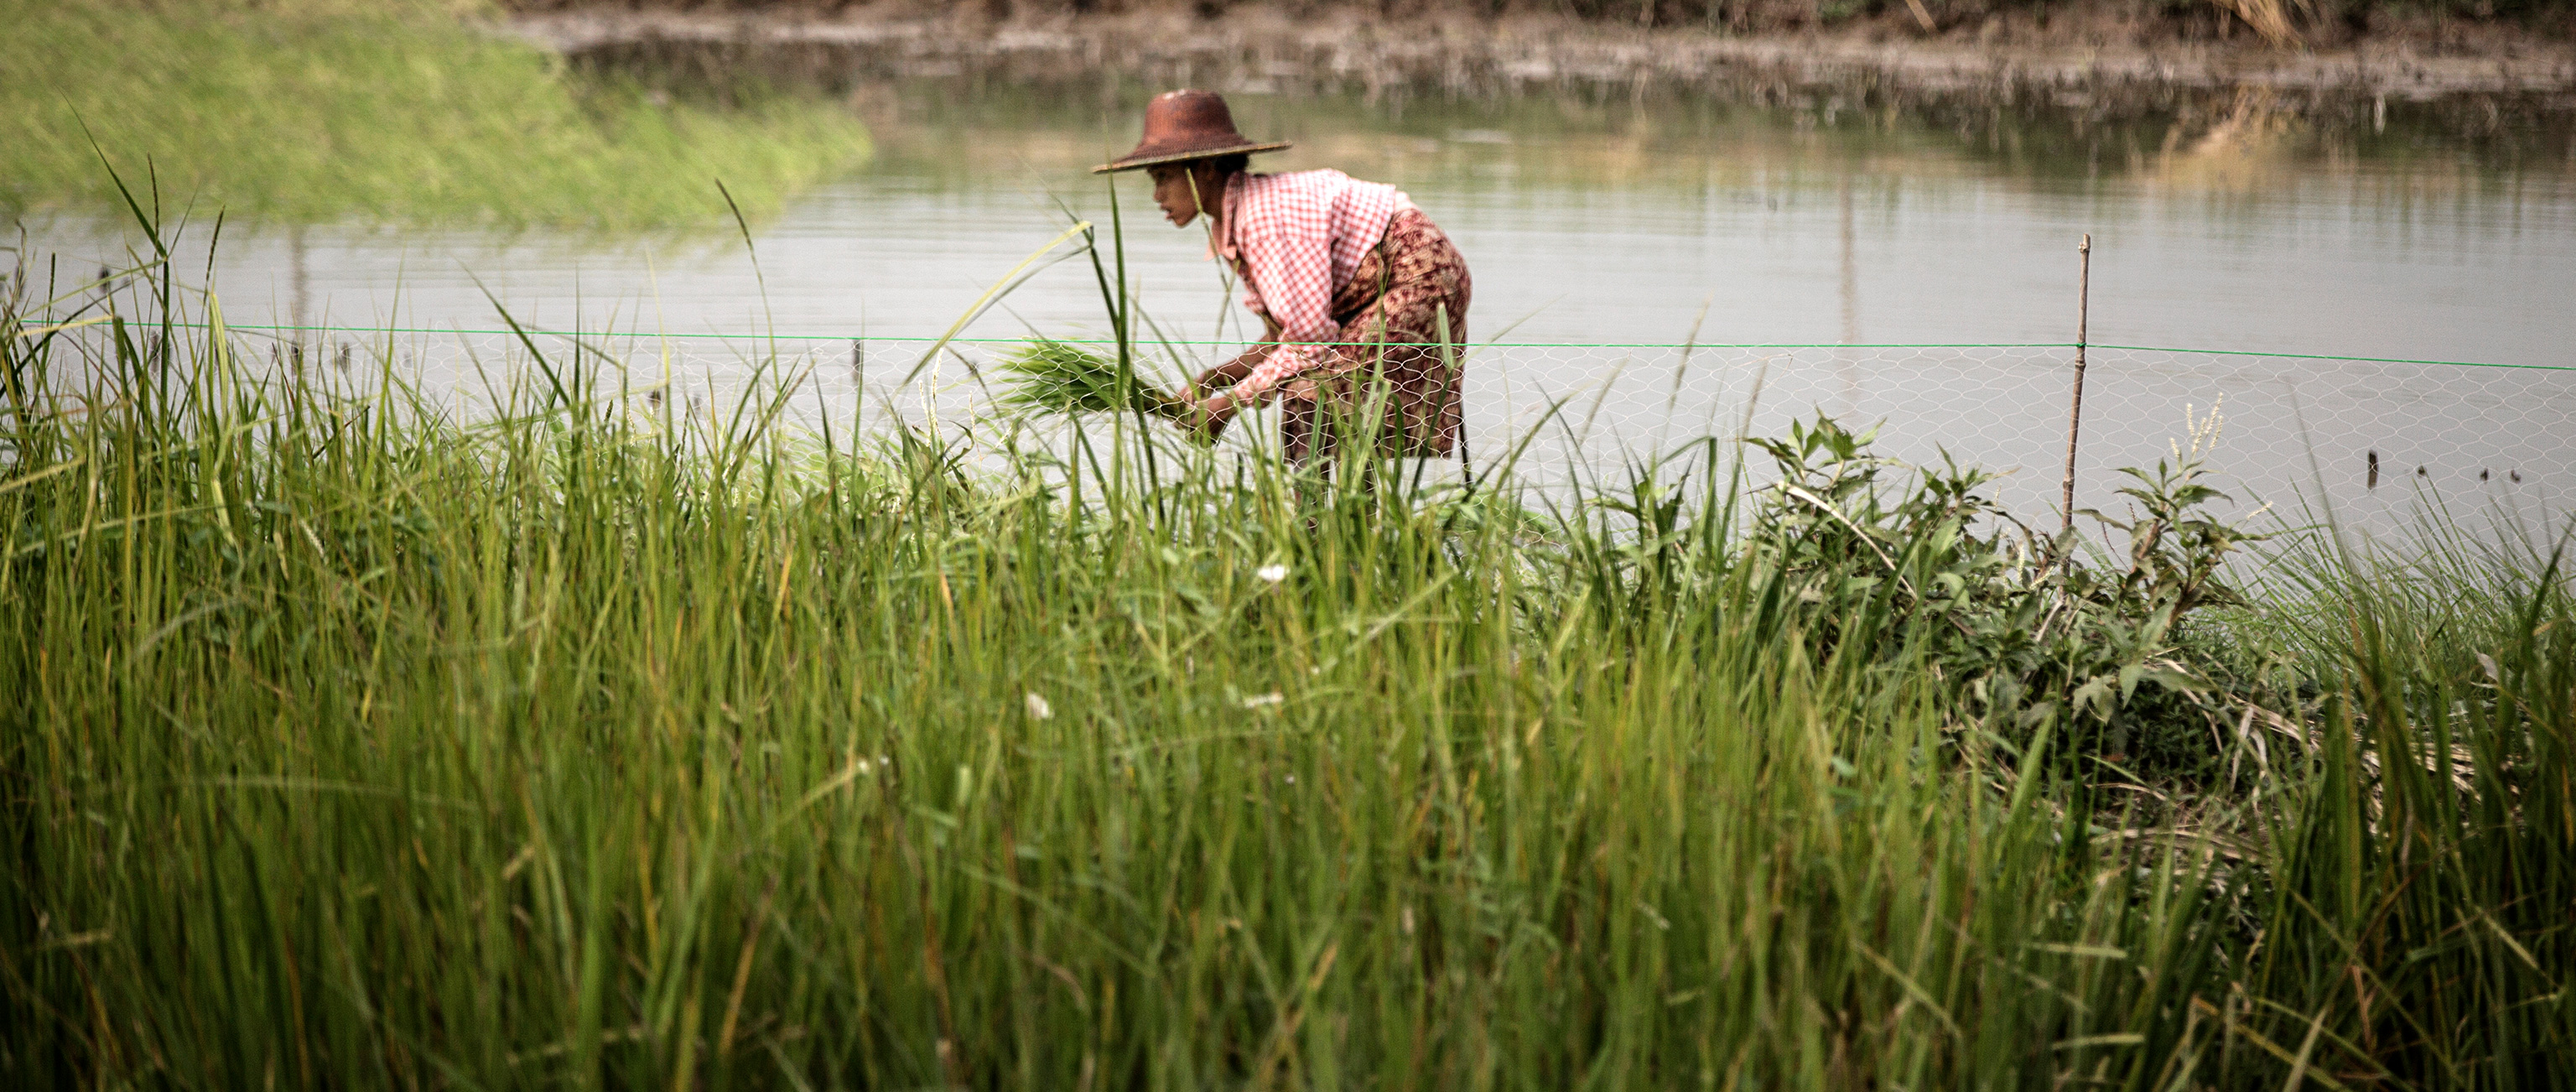 Financing Myanmar’s Smallholder Farmers With Patient Capital